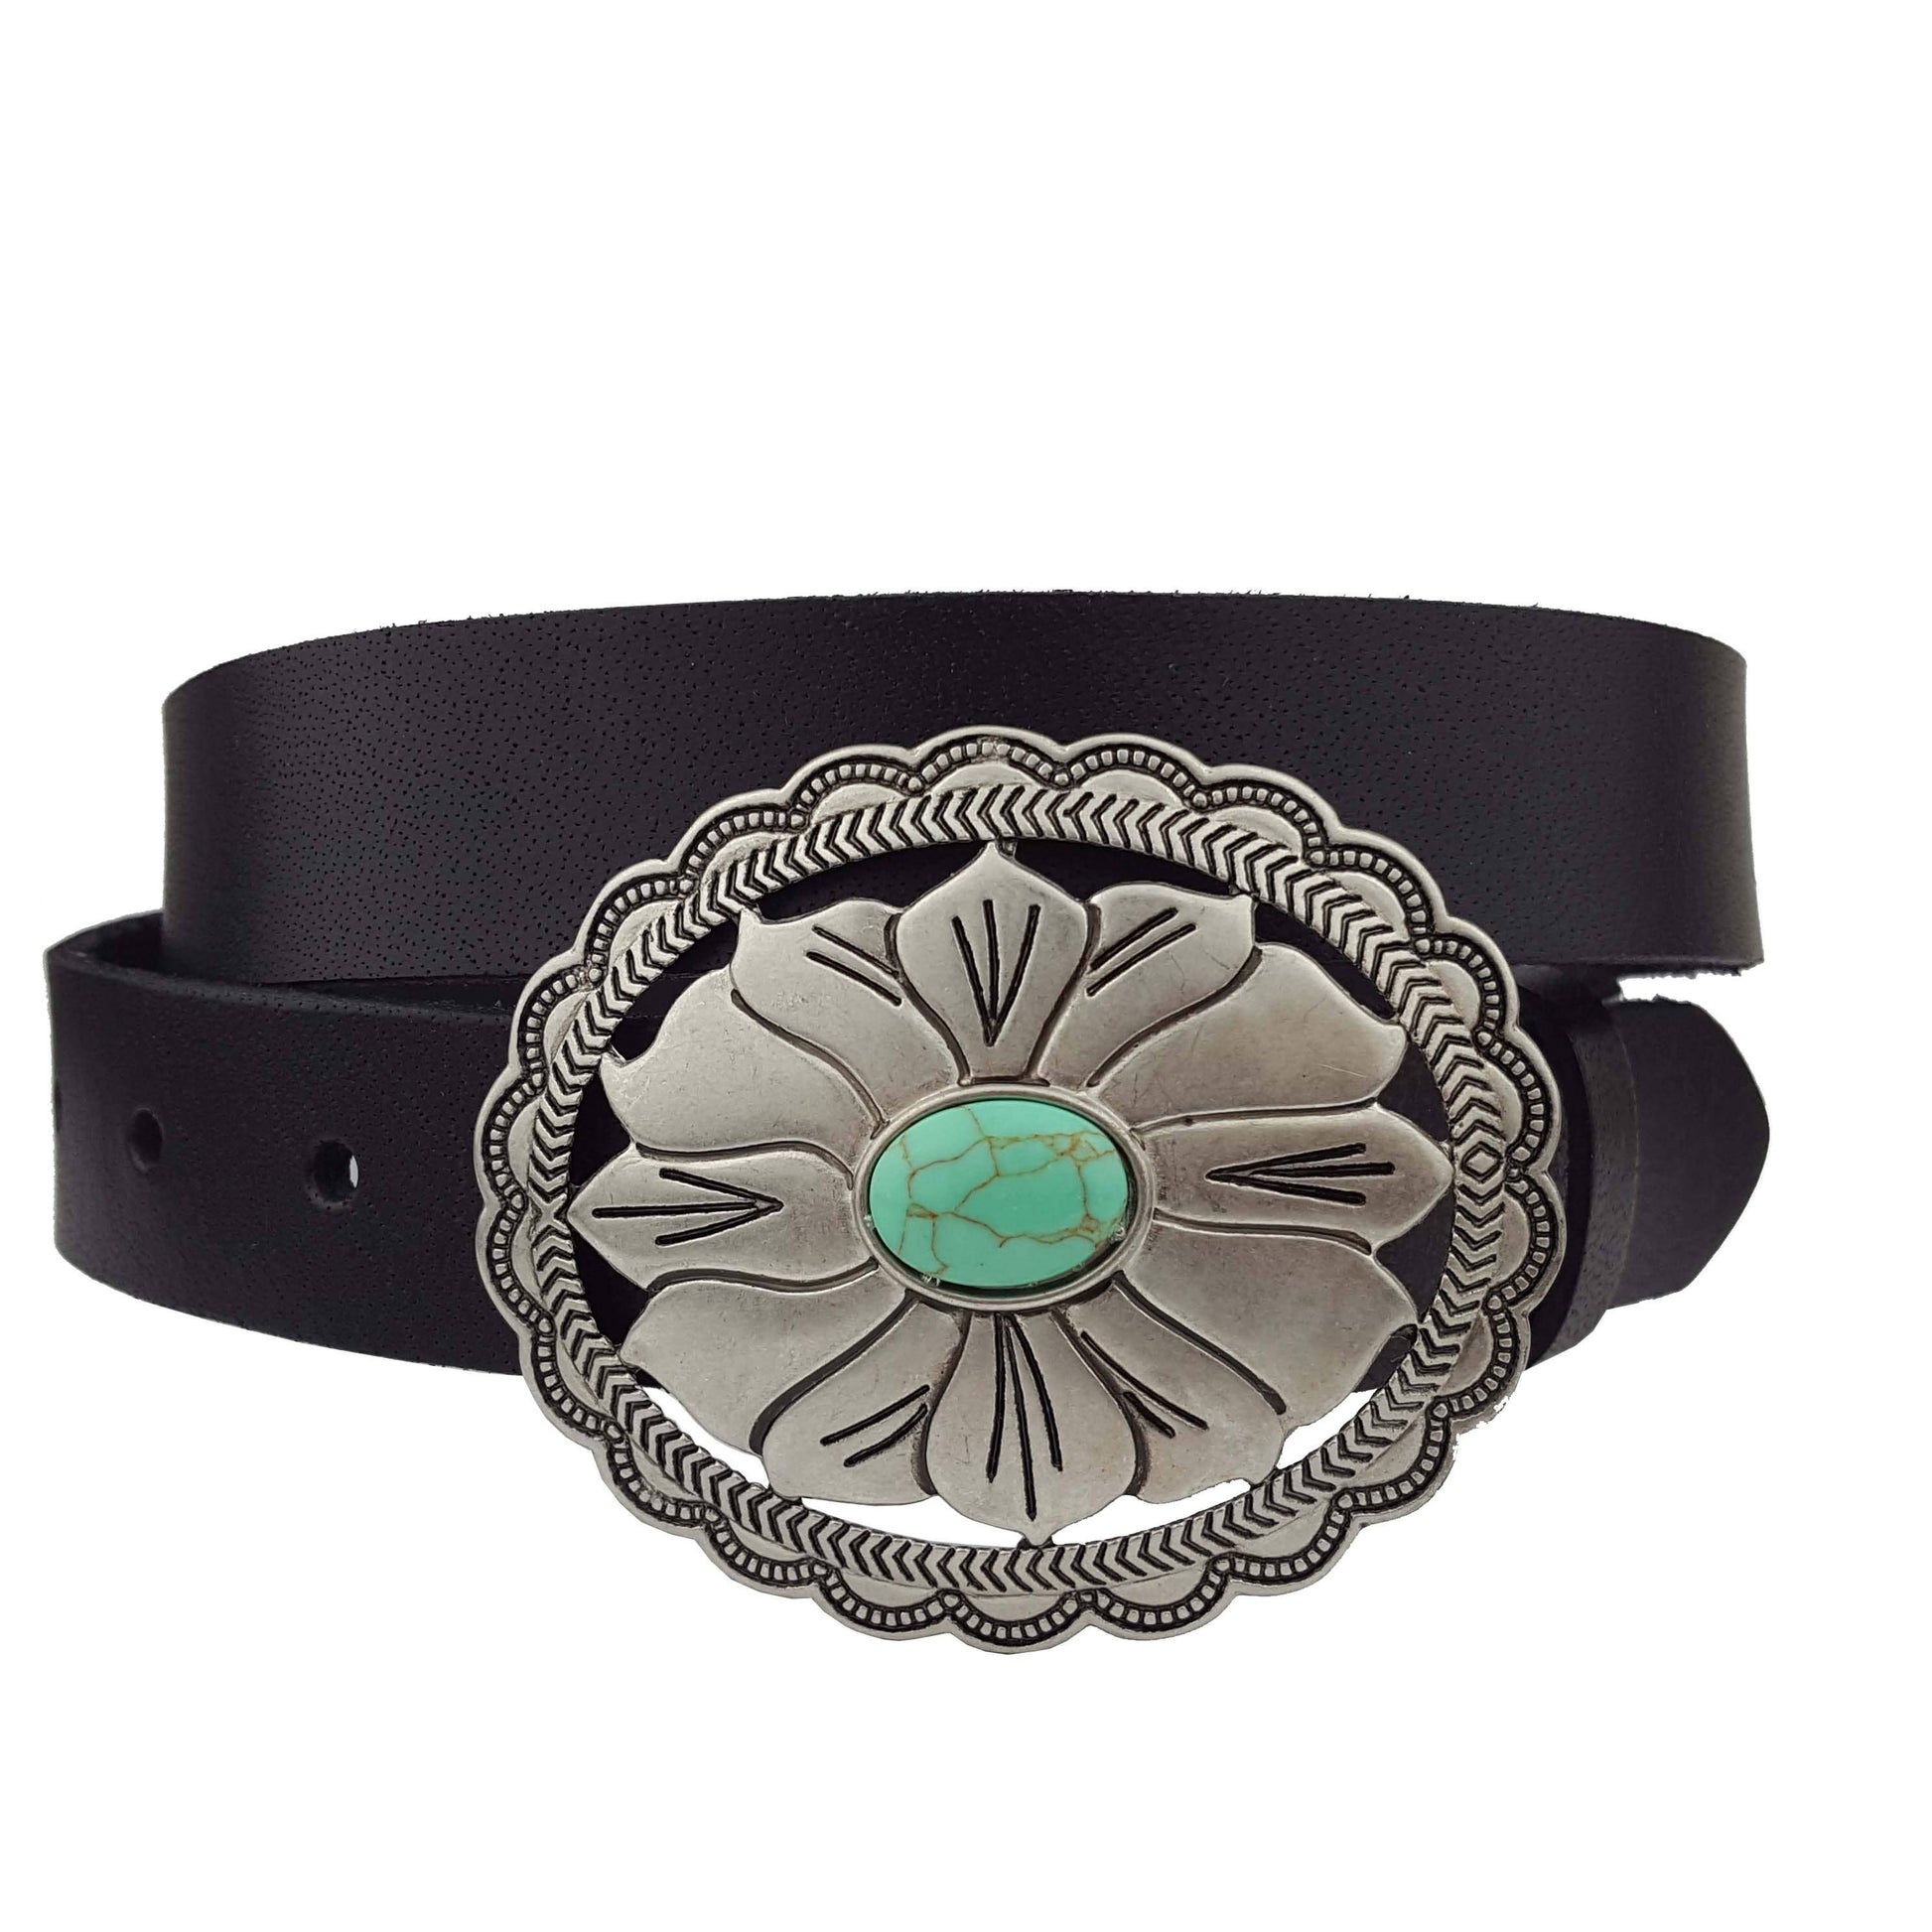 Genuine Leather Belt w Western-Inspired Floral Buckle - La De Da